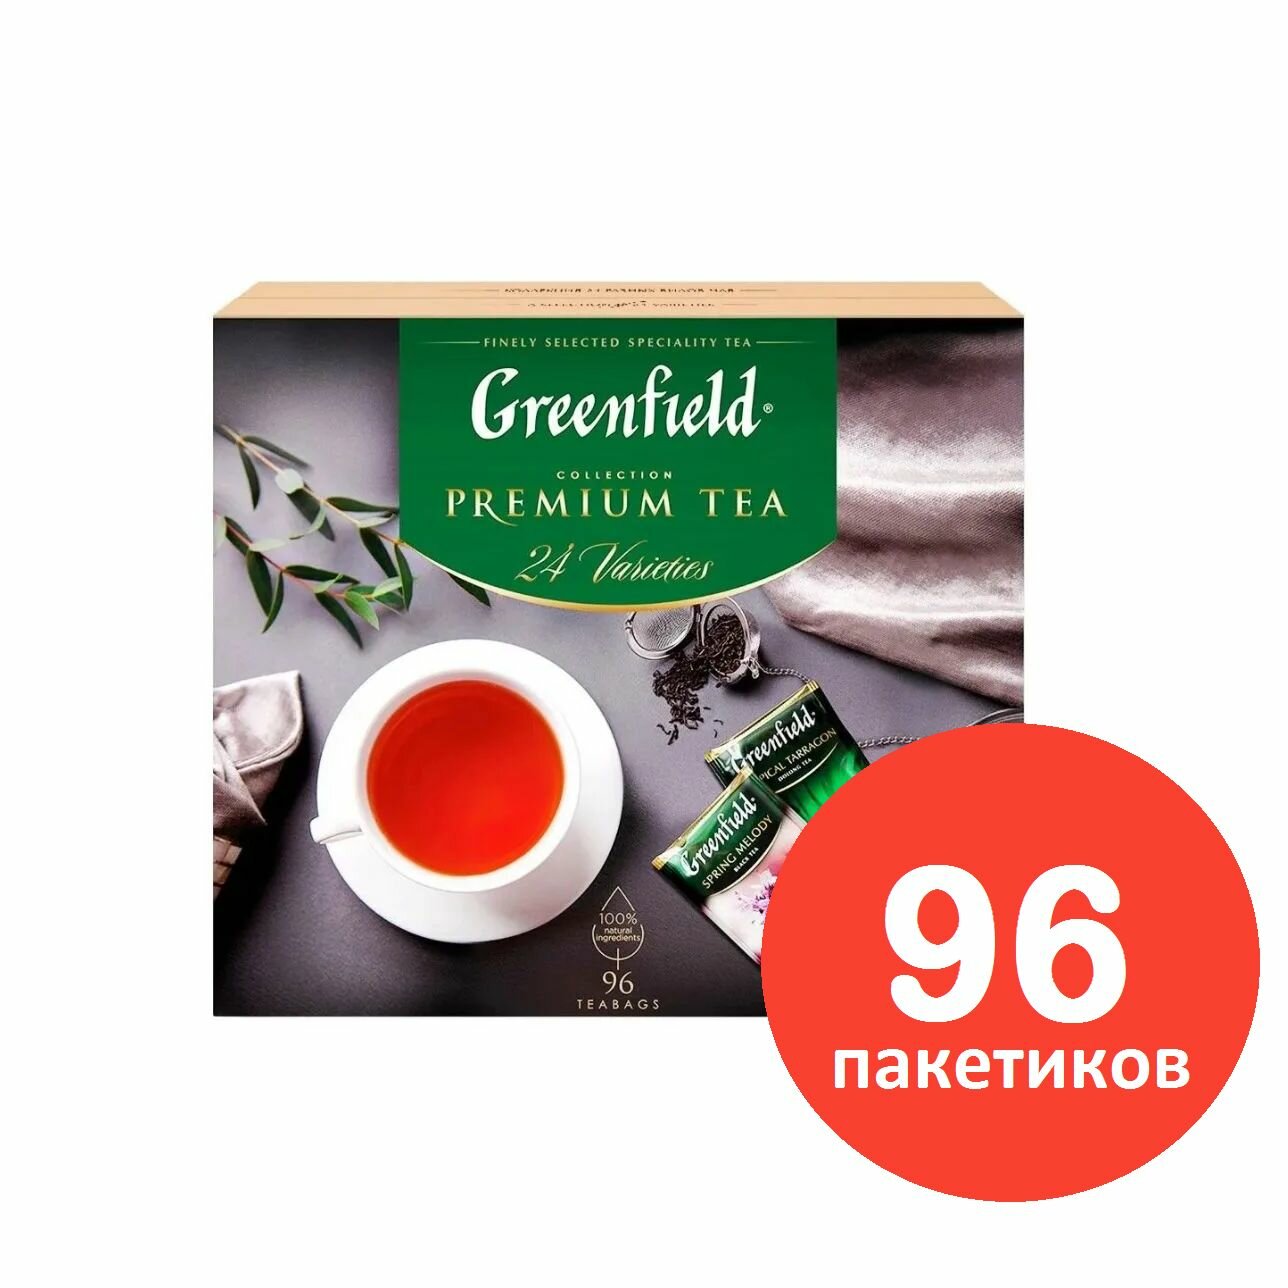 Набор чая Greenfield Premium Tea Collection, 24 вида, 96 пакетиков